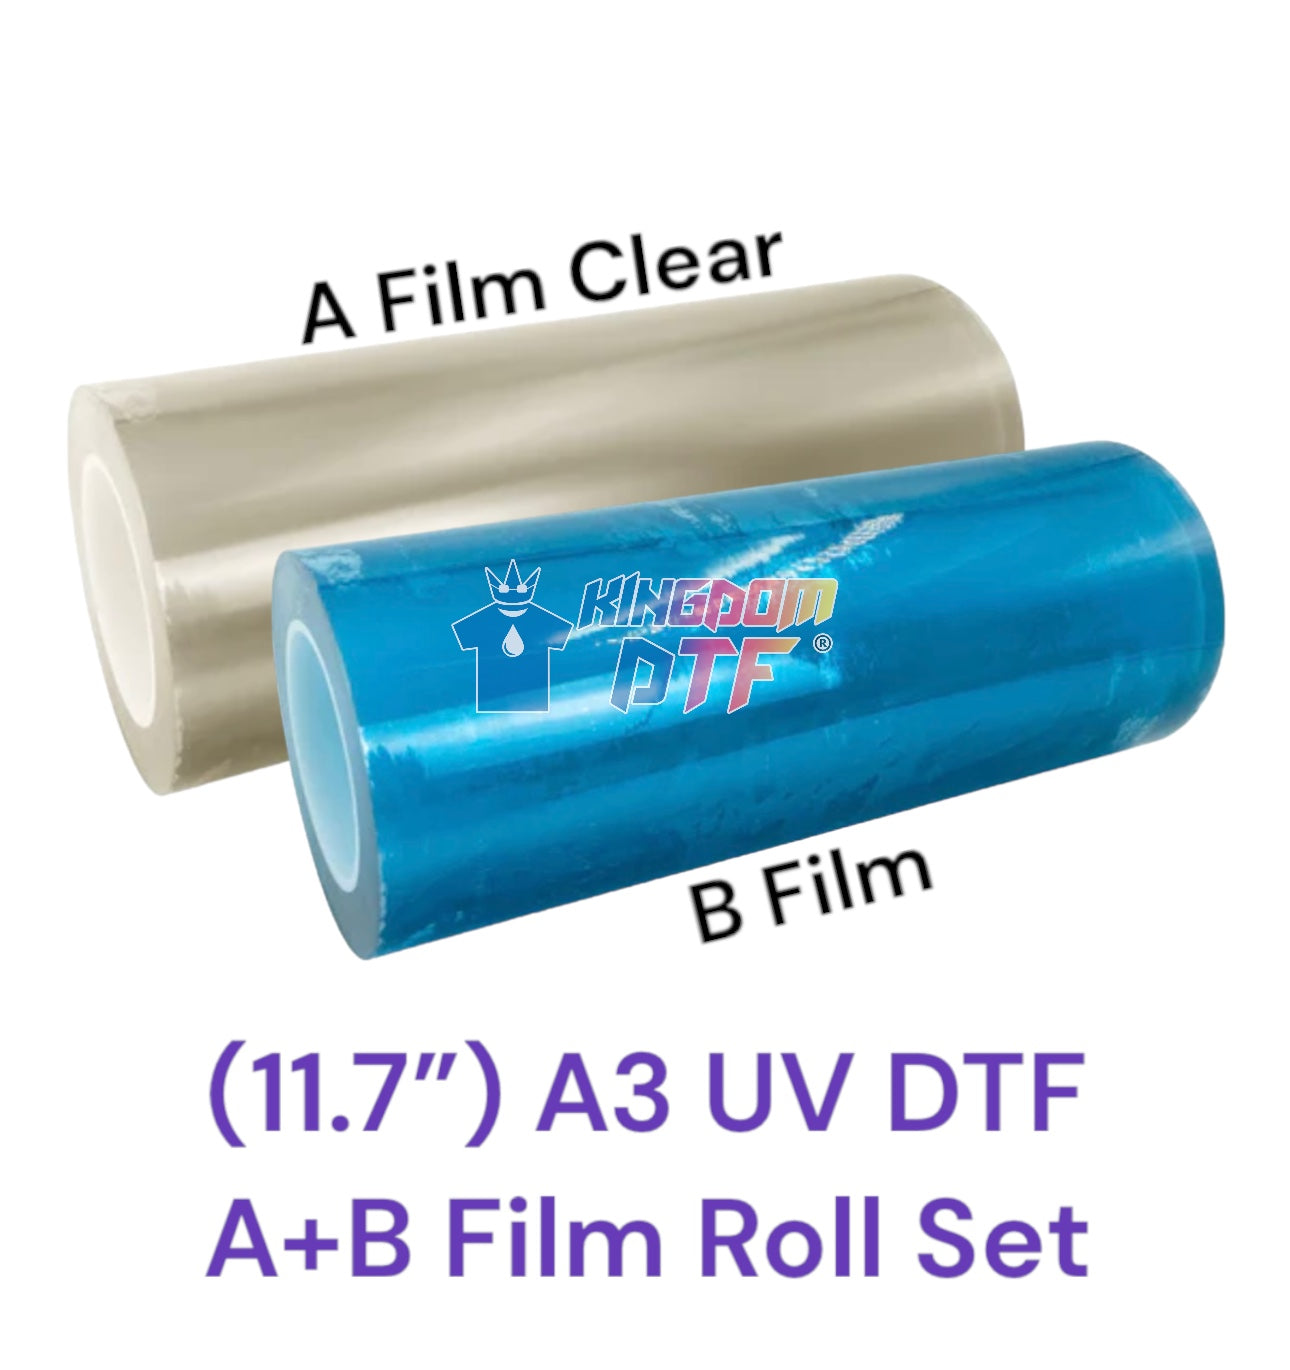 UV DTF CLEAR Film 11.7" x 328' (100m) - A+B Film Roll Set (CLEAR)